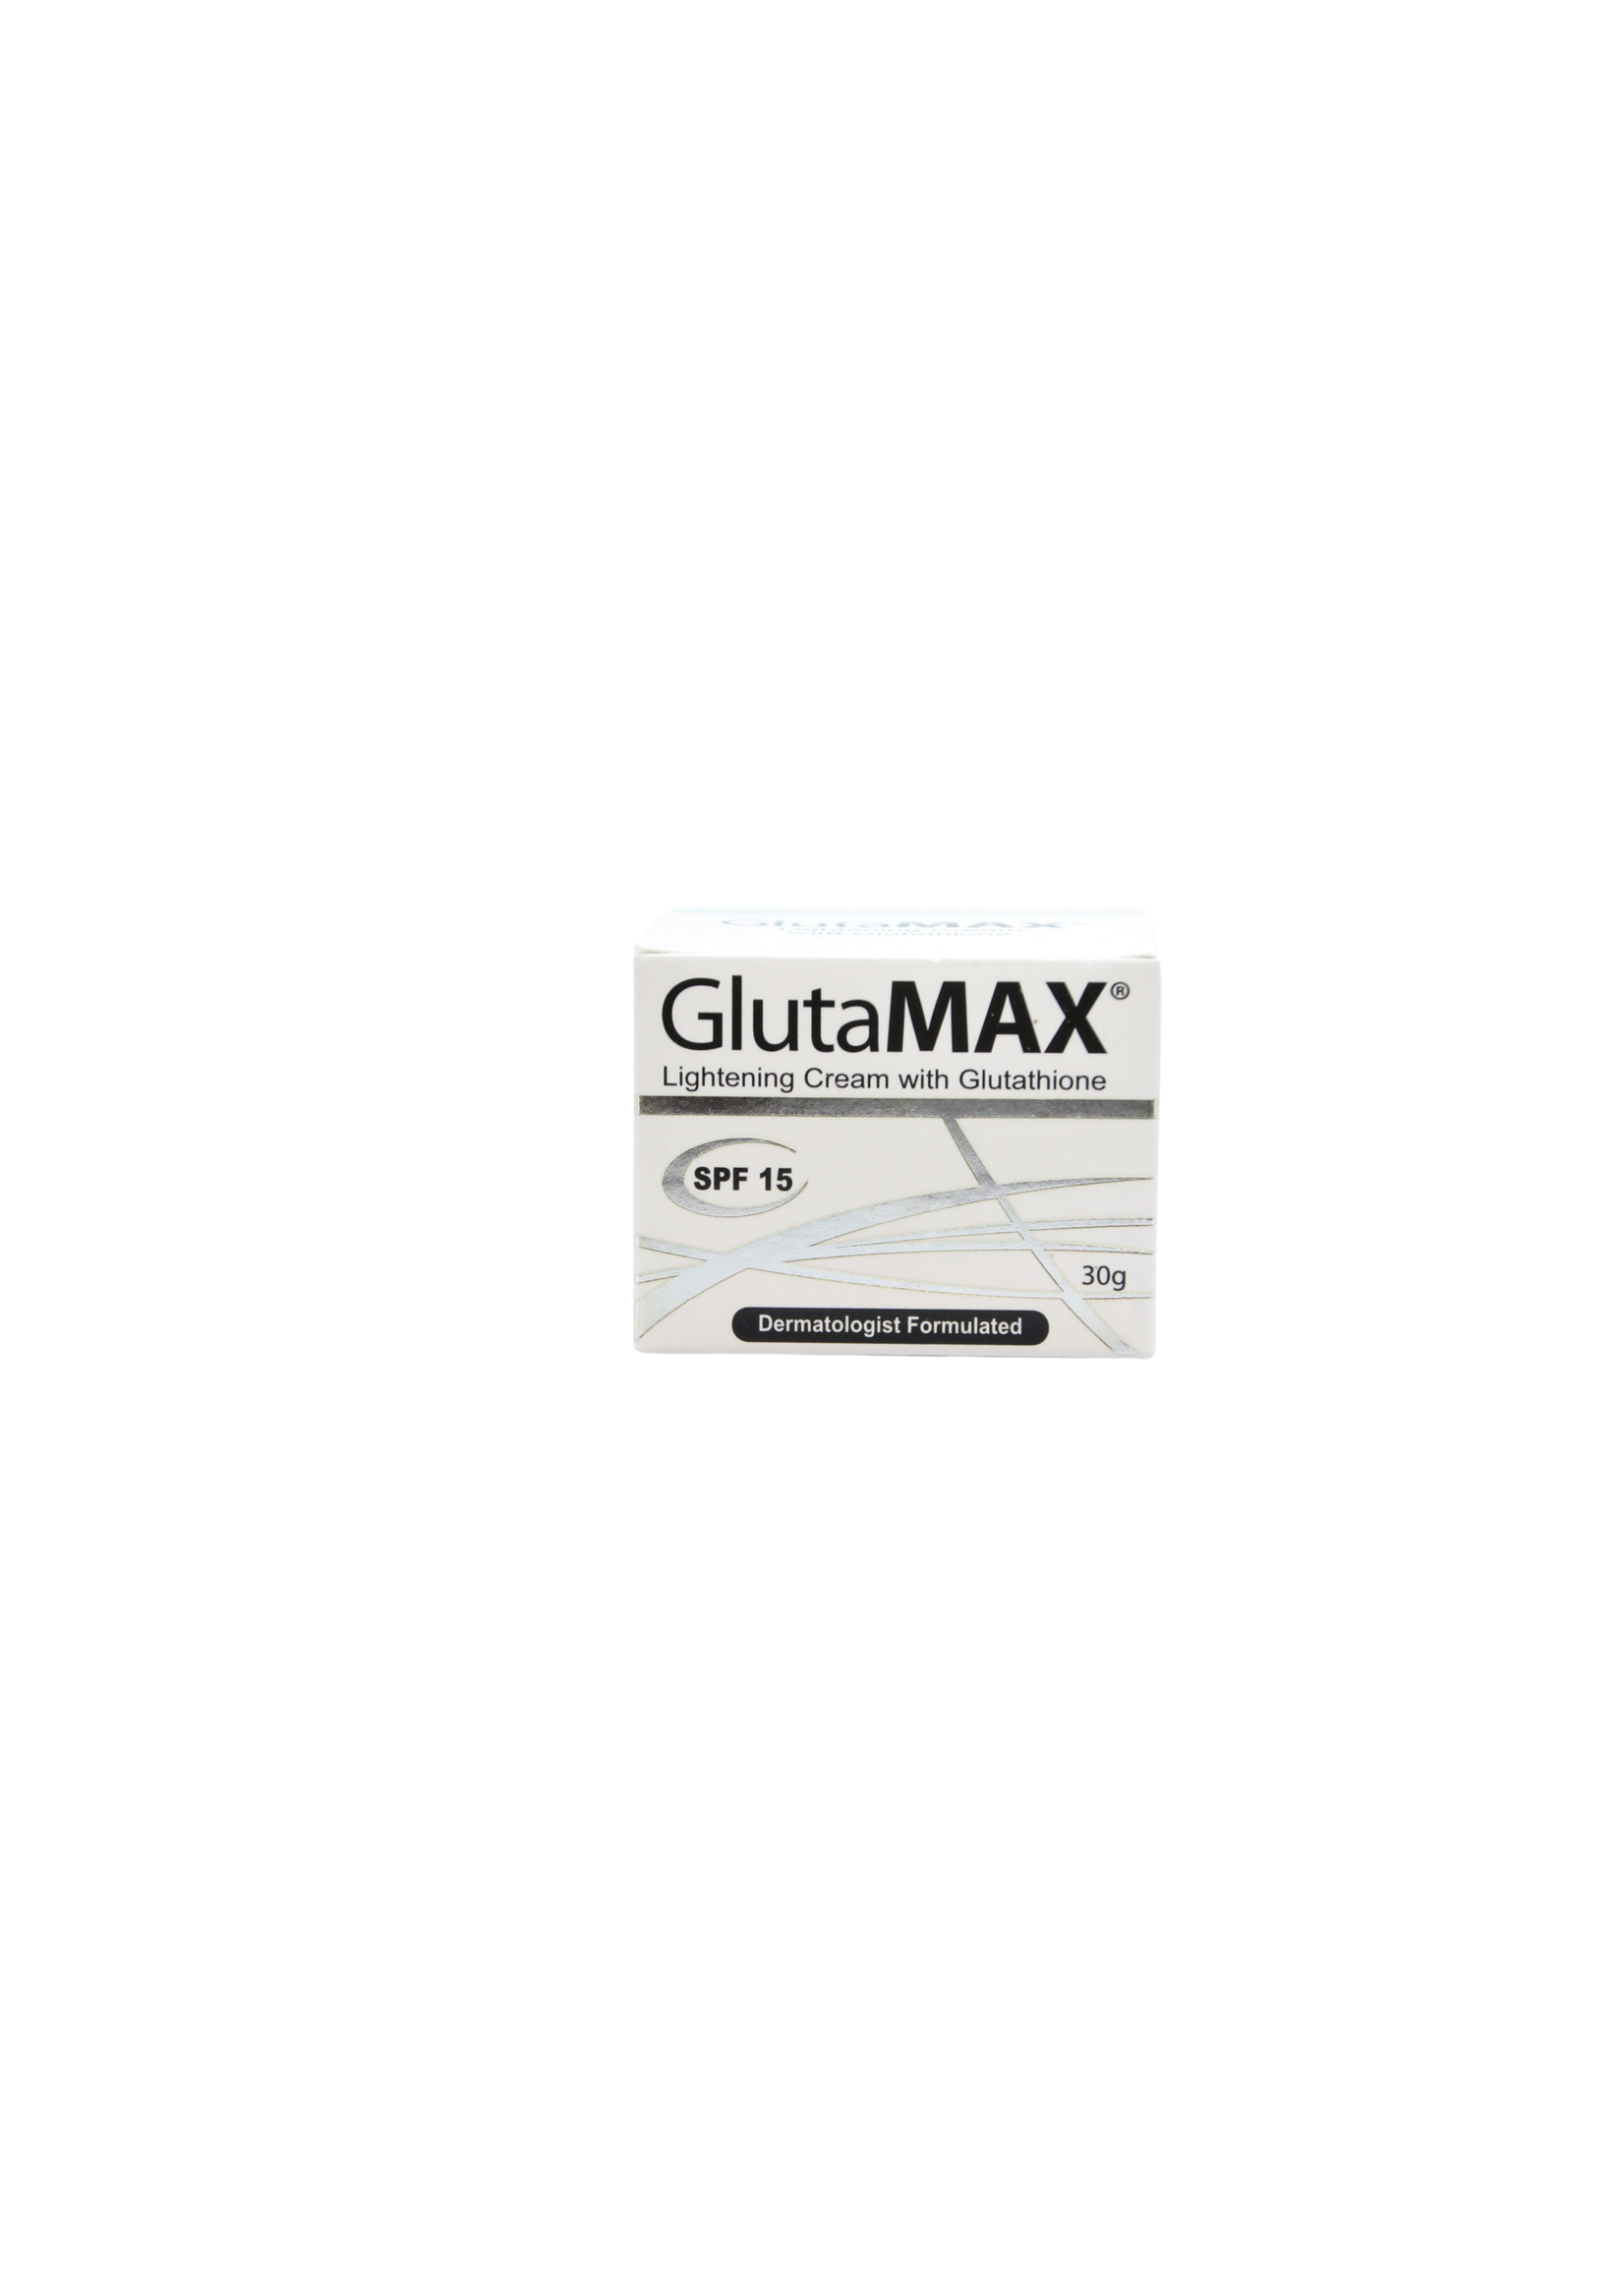 GlutaMAX GlutaMAX skin lightening crème  SFP 15